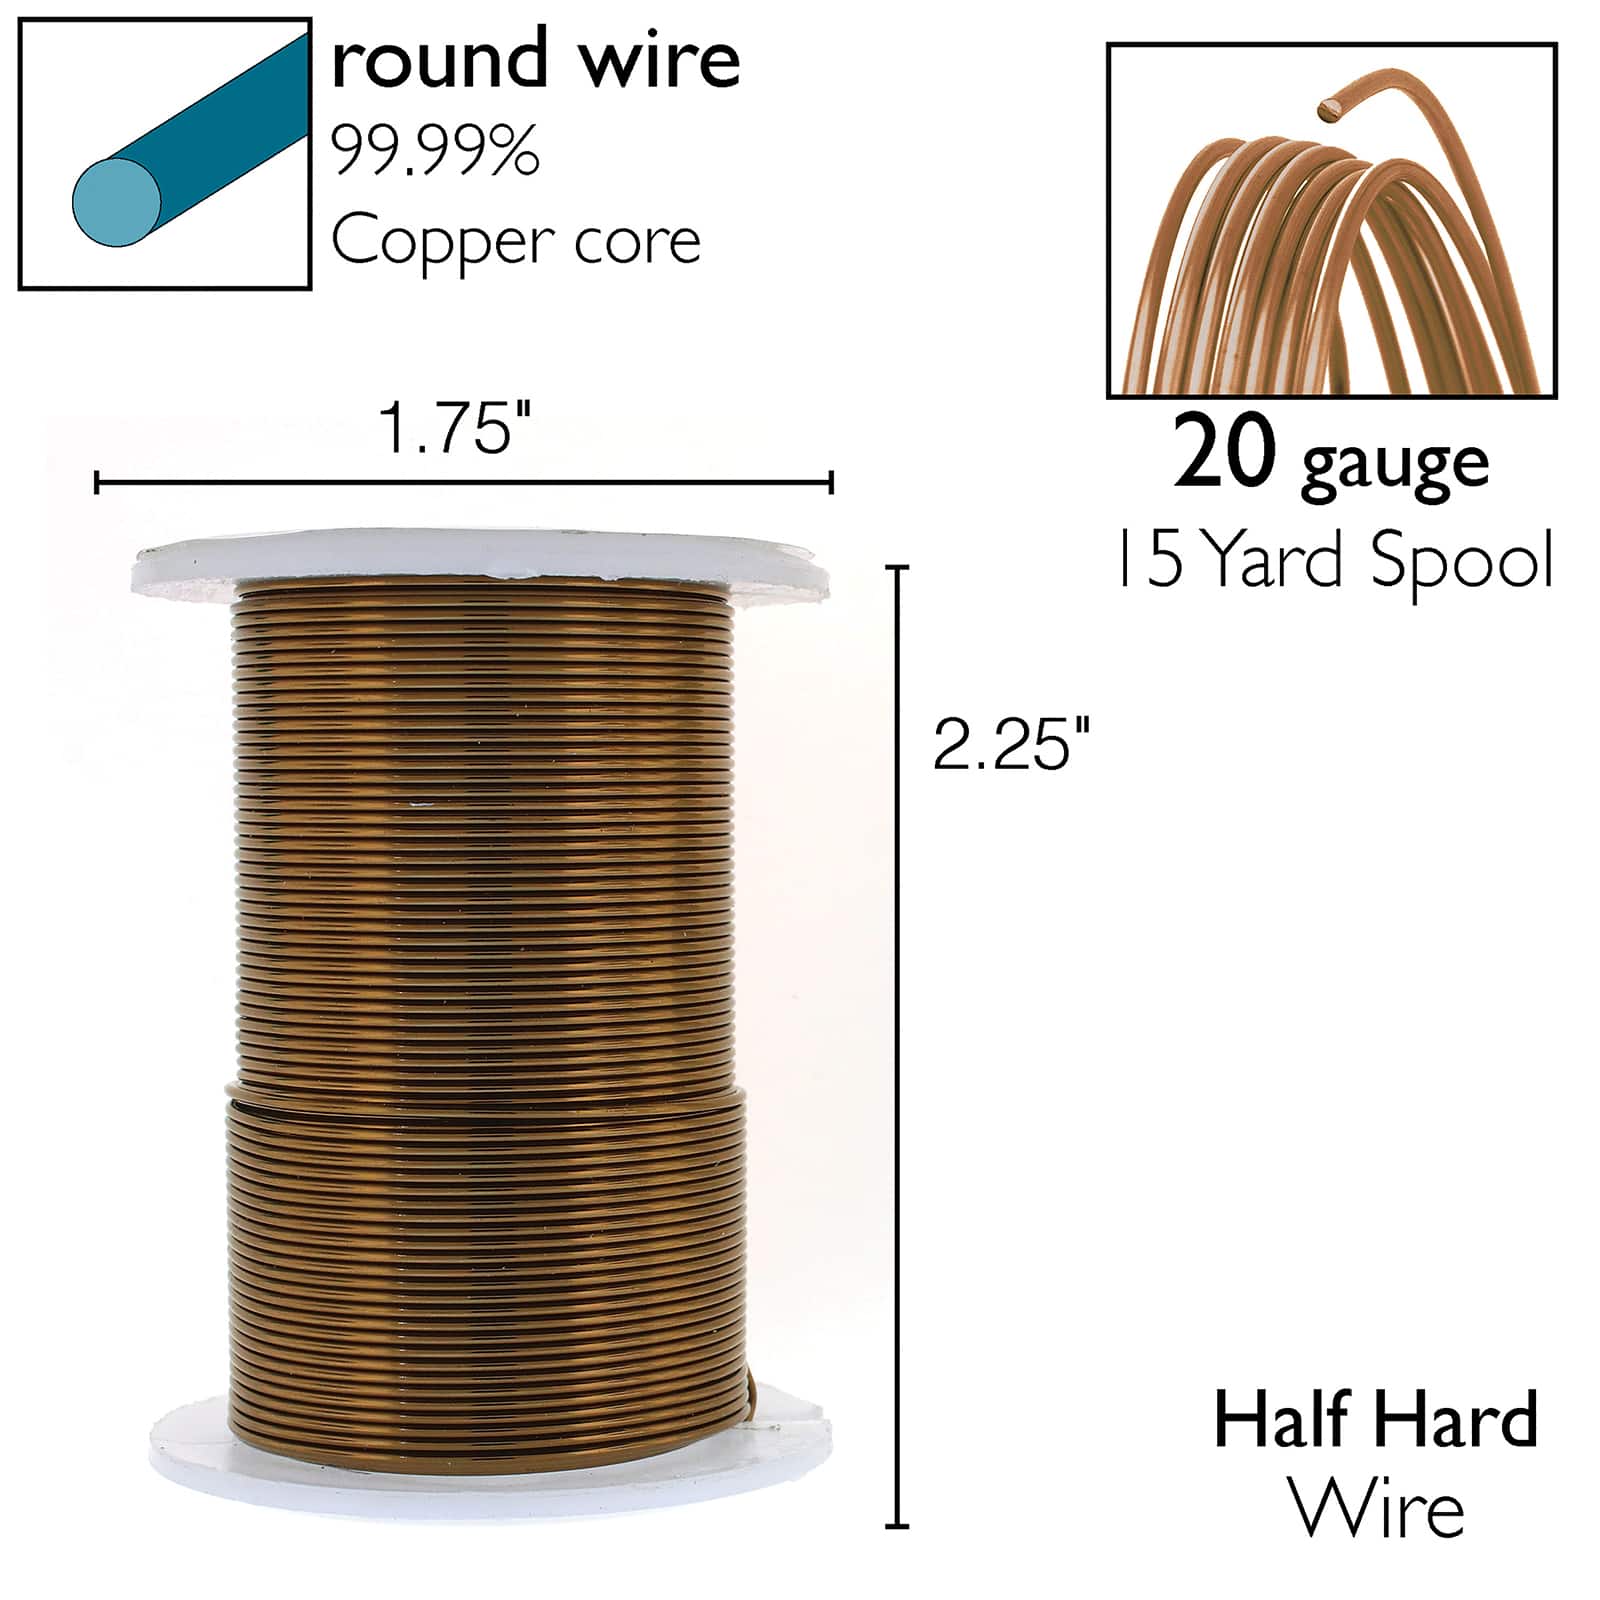 Wire Elements, Tarnish Resistant Bright Copper Wire, 28 Gauge 40